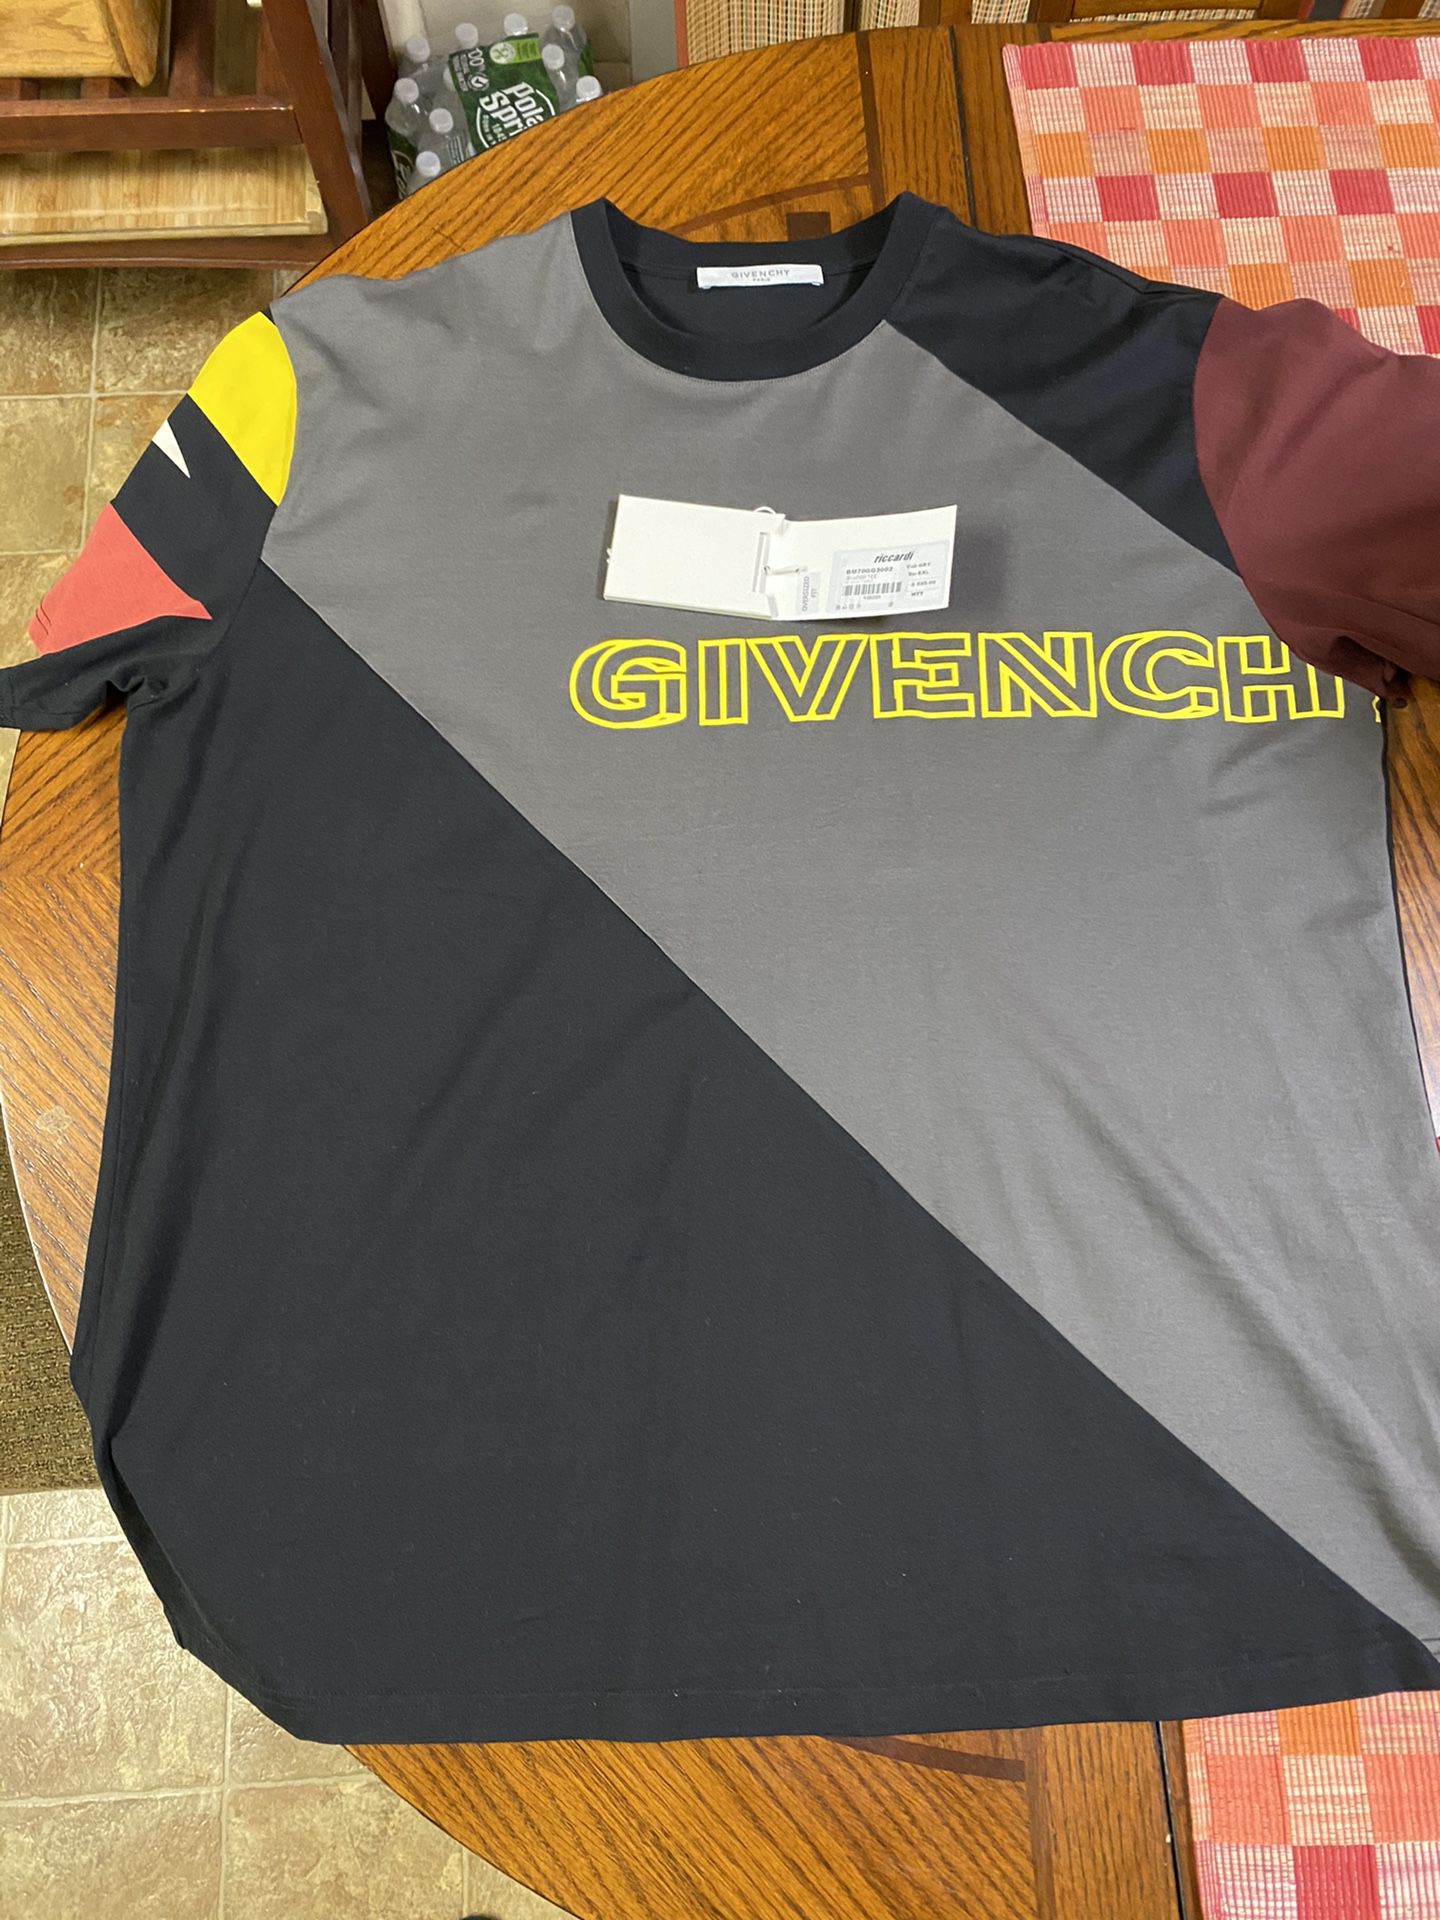 Givenchy T-shirt! 2x! Worn twice